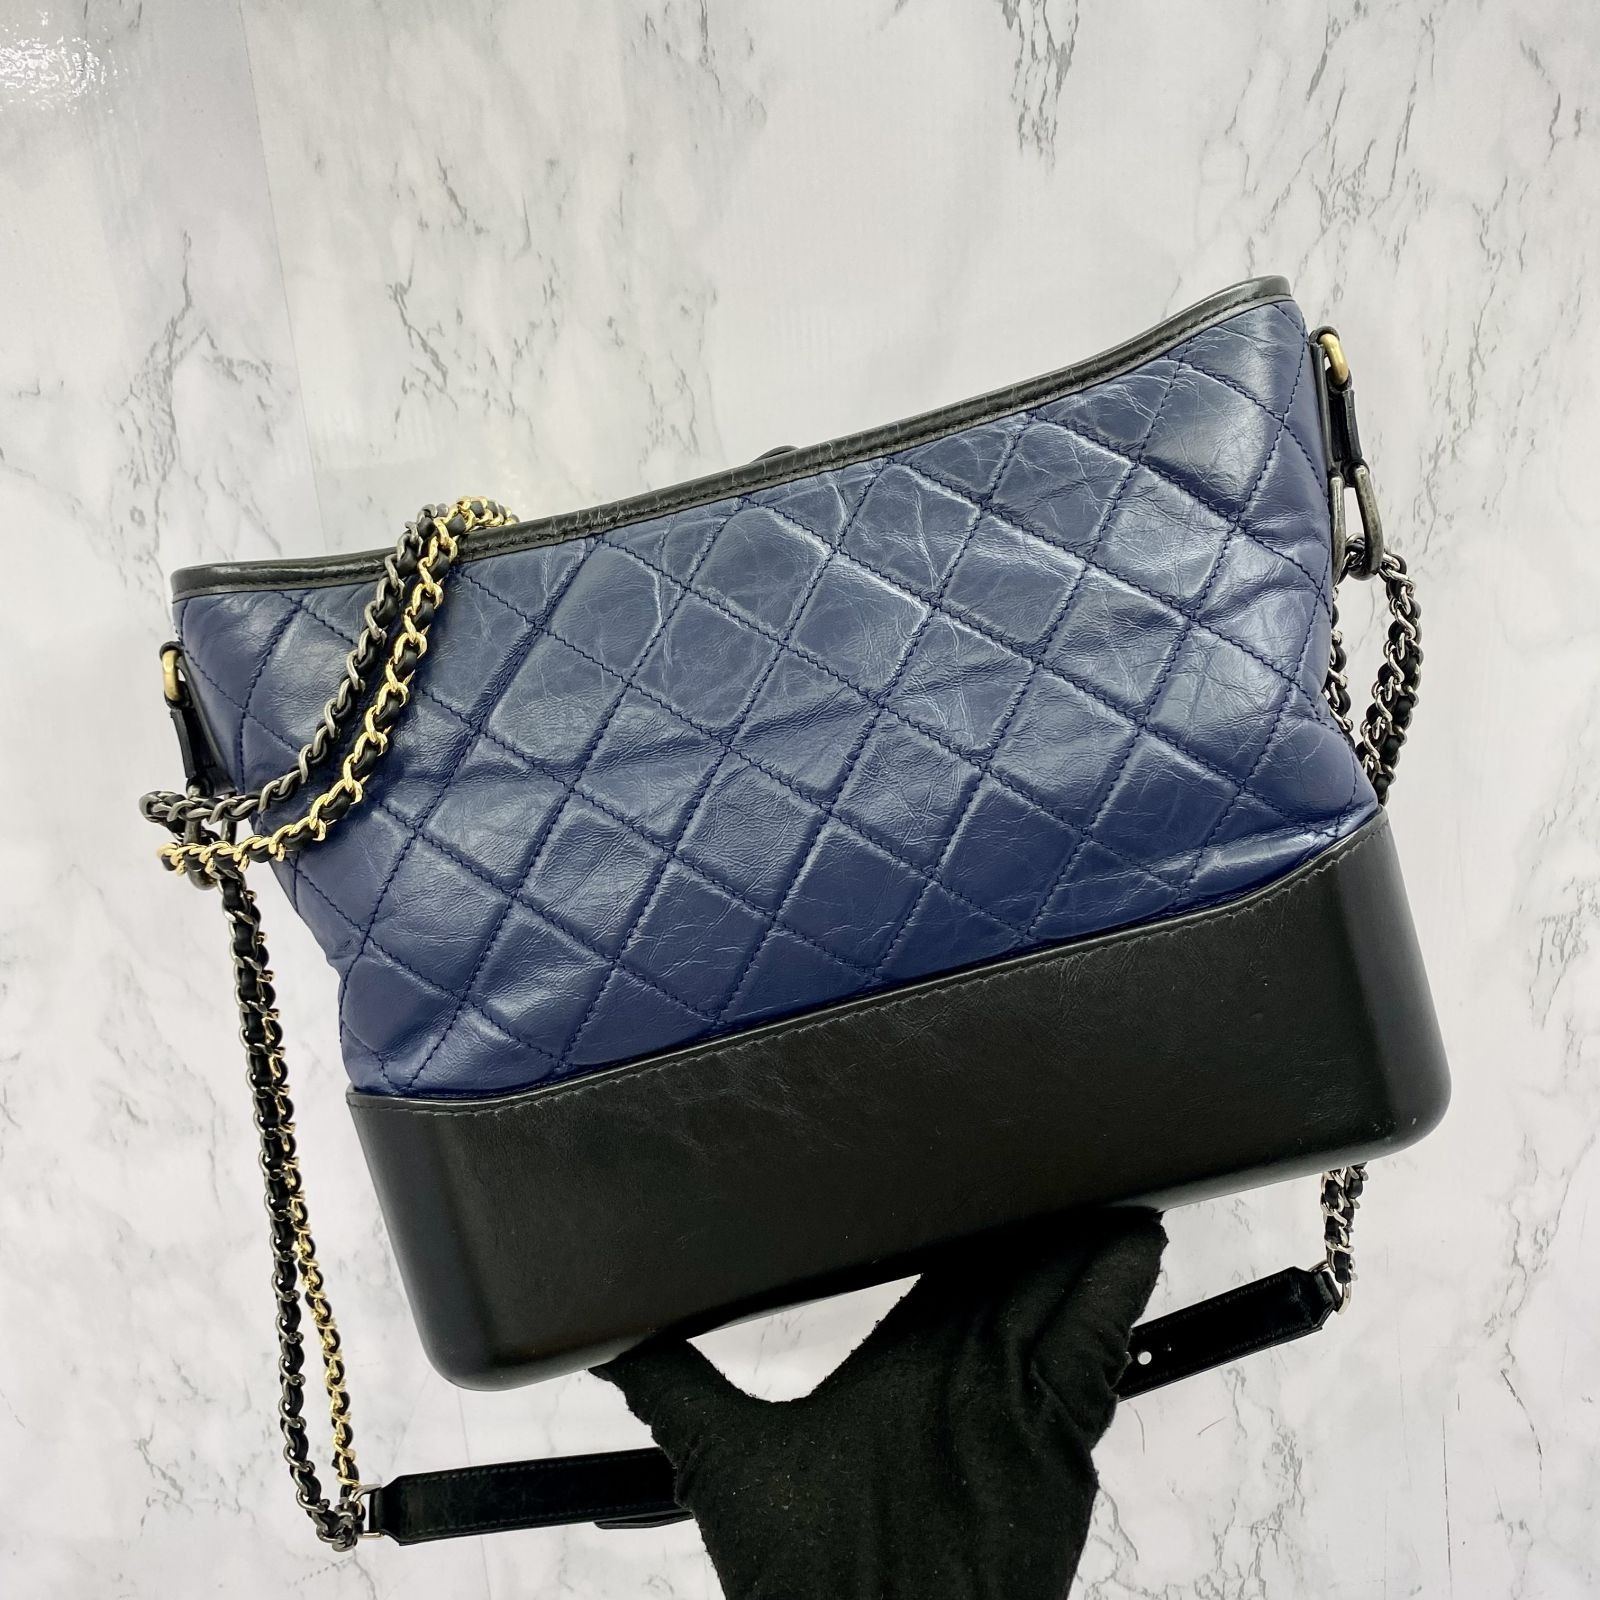 Chanel Gabrielle Hobo Medium Beige/Black Aged Calfskin Leather with 2 tone  hardware